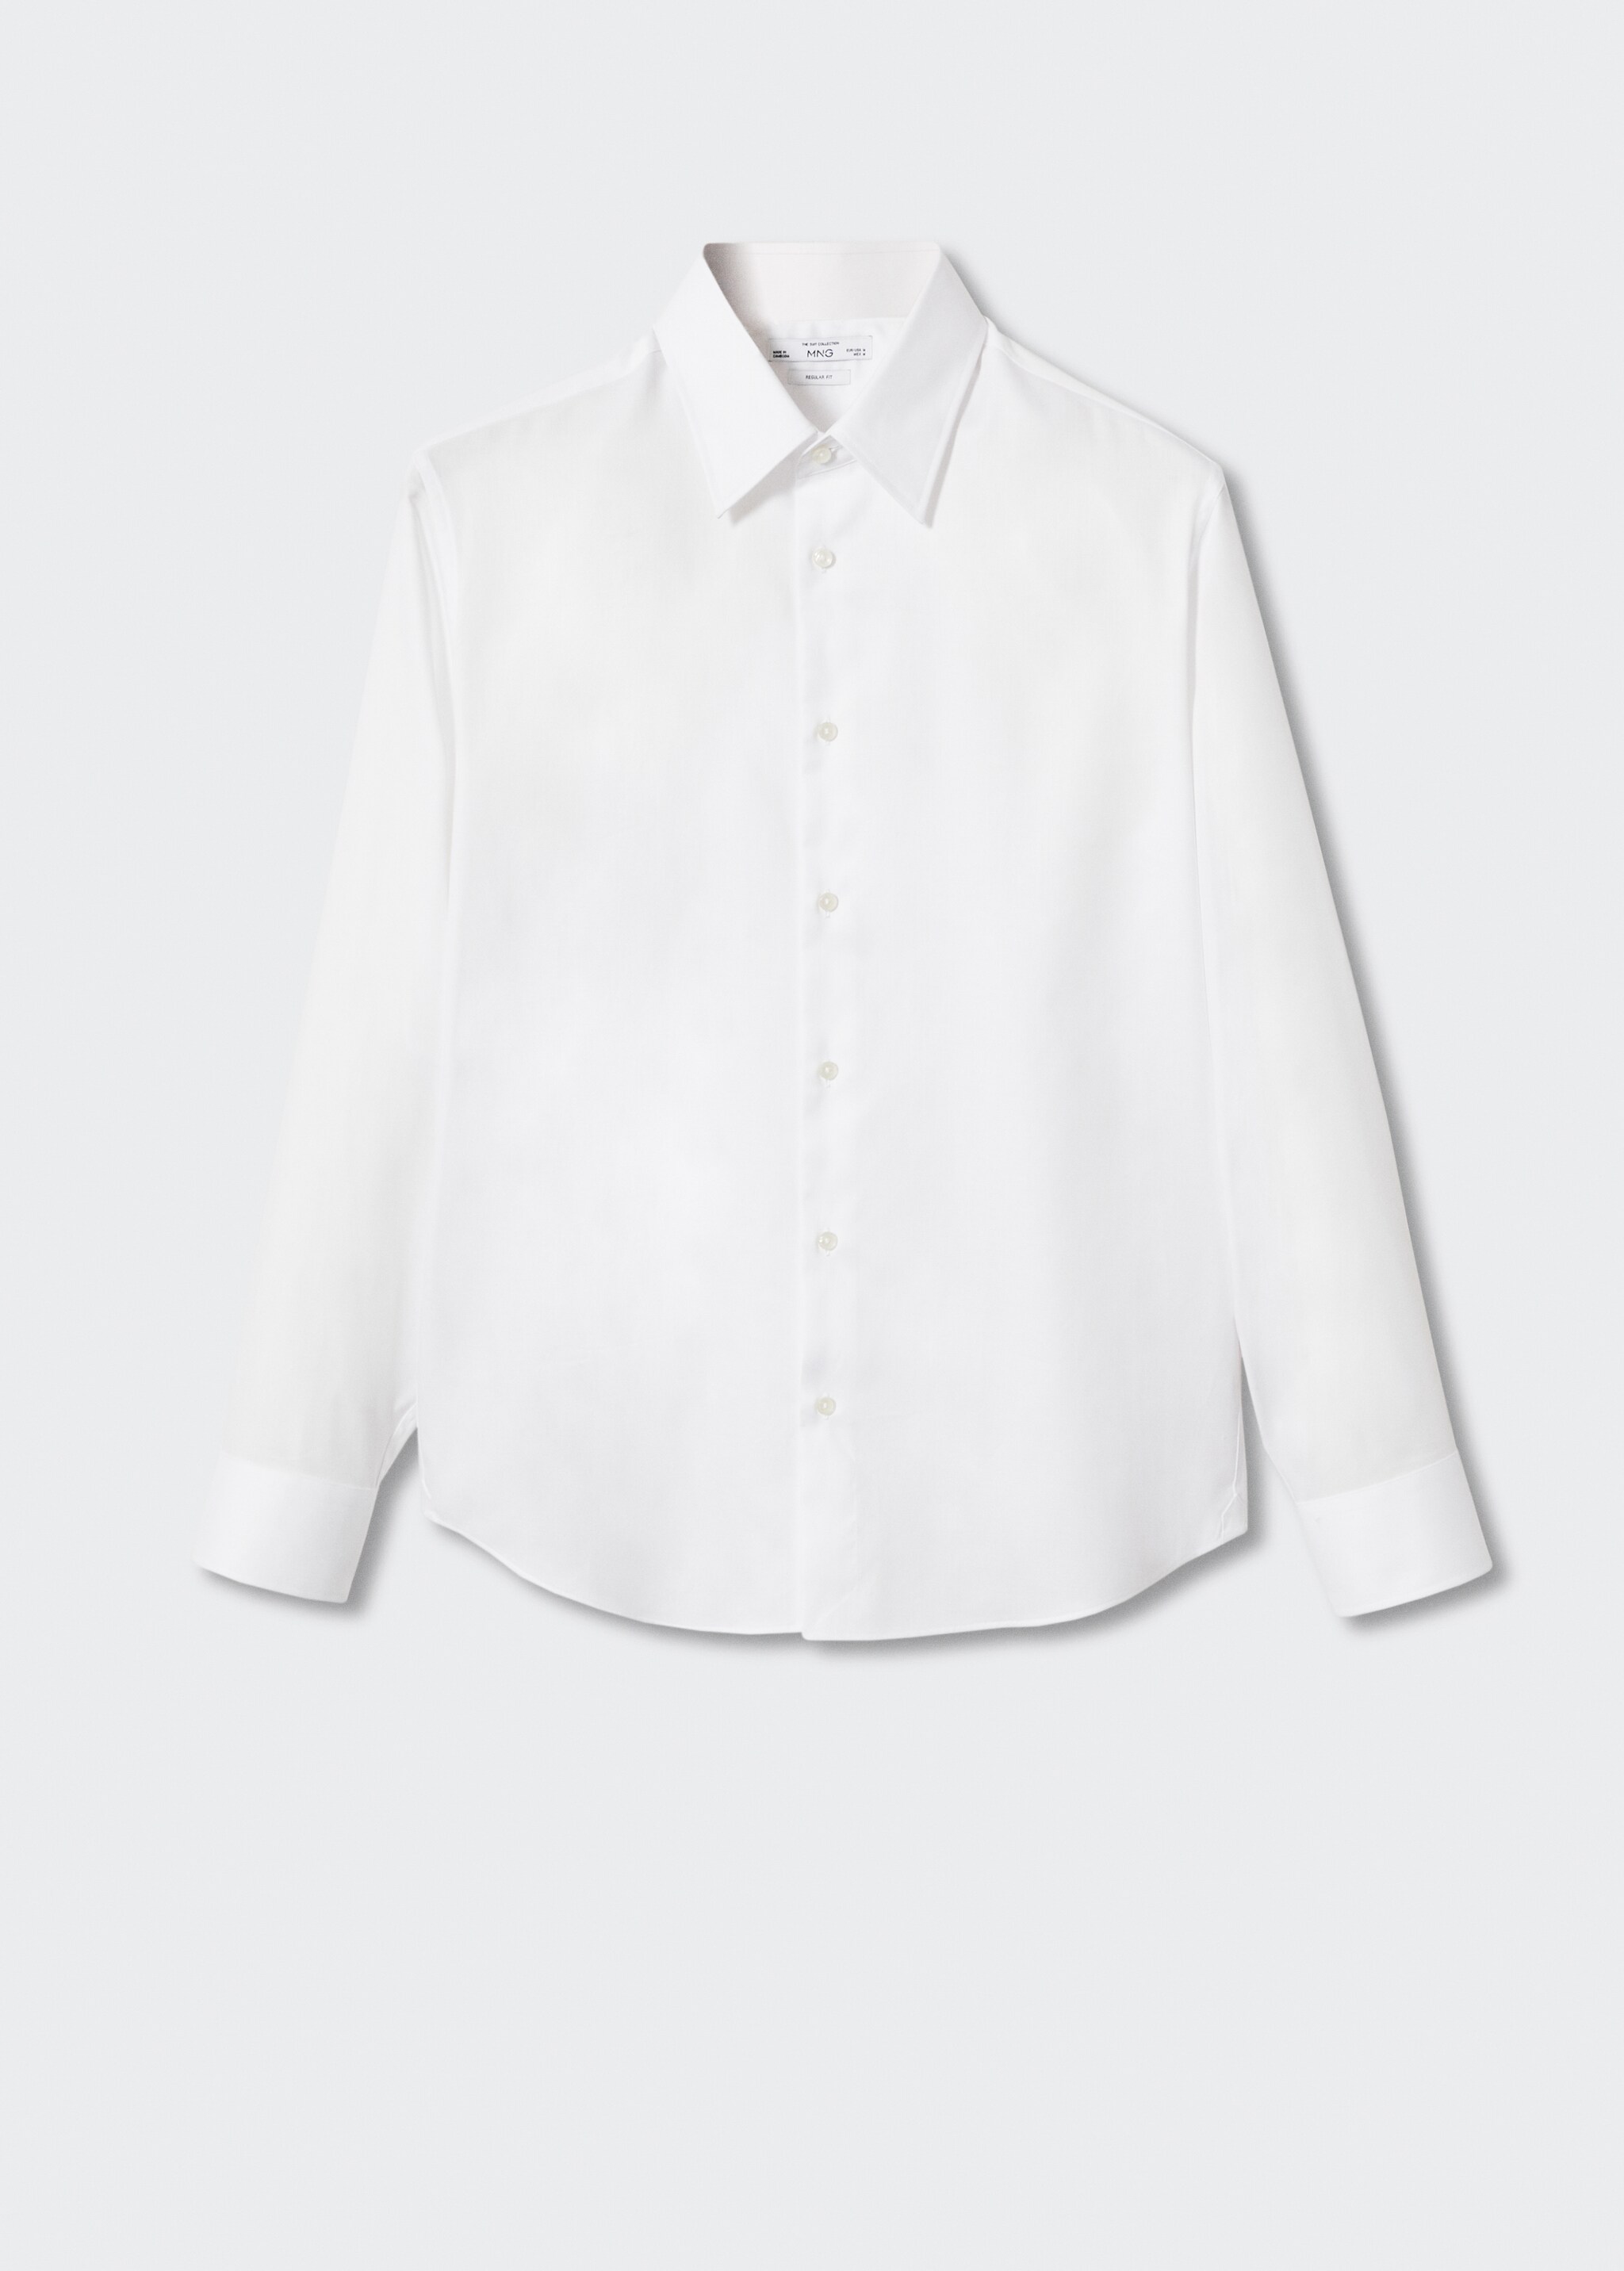 Regular fit cotton suit shirt - Article without model